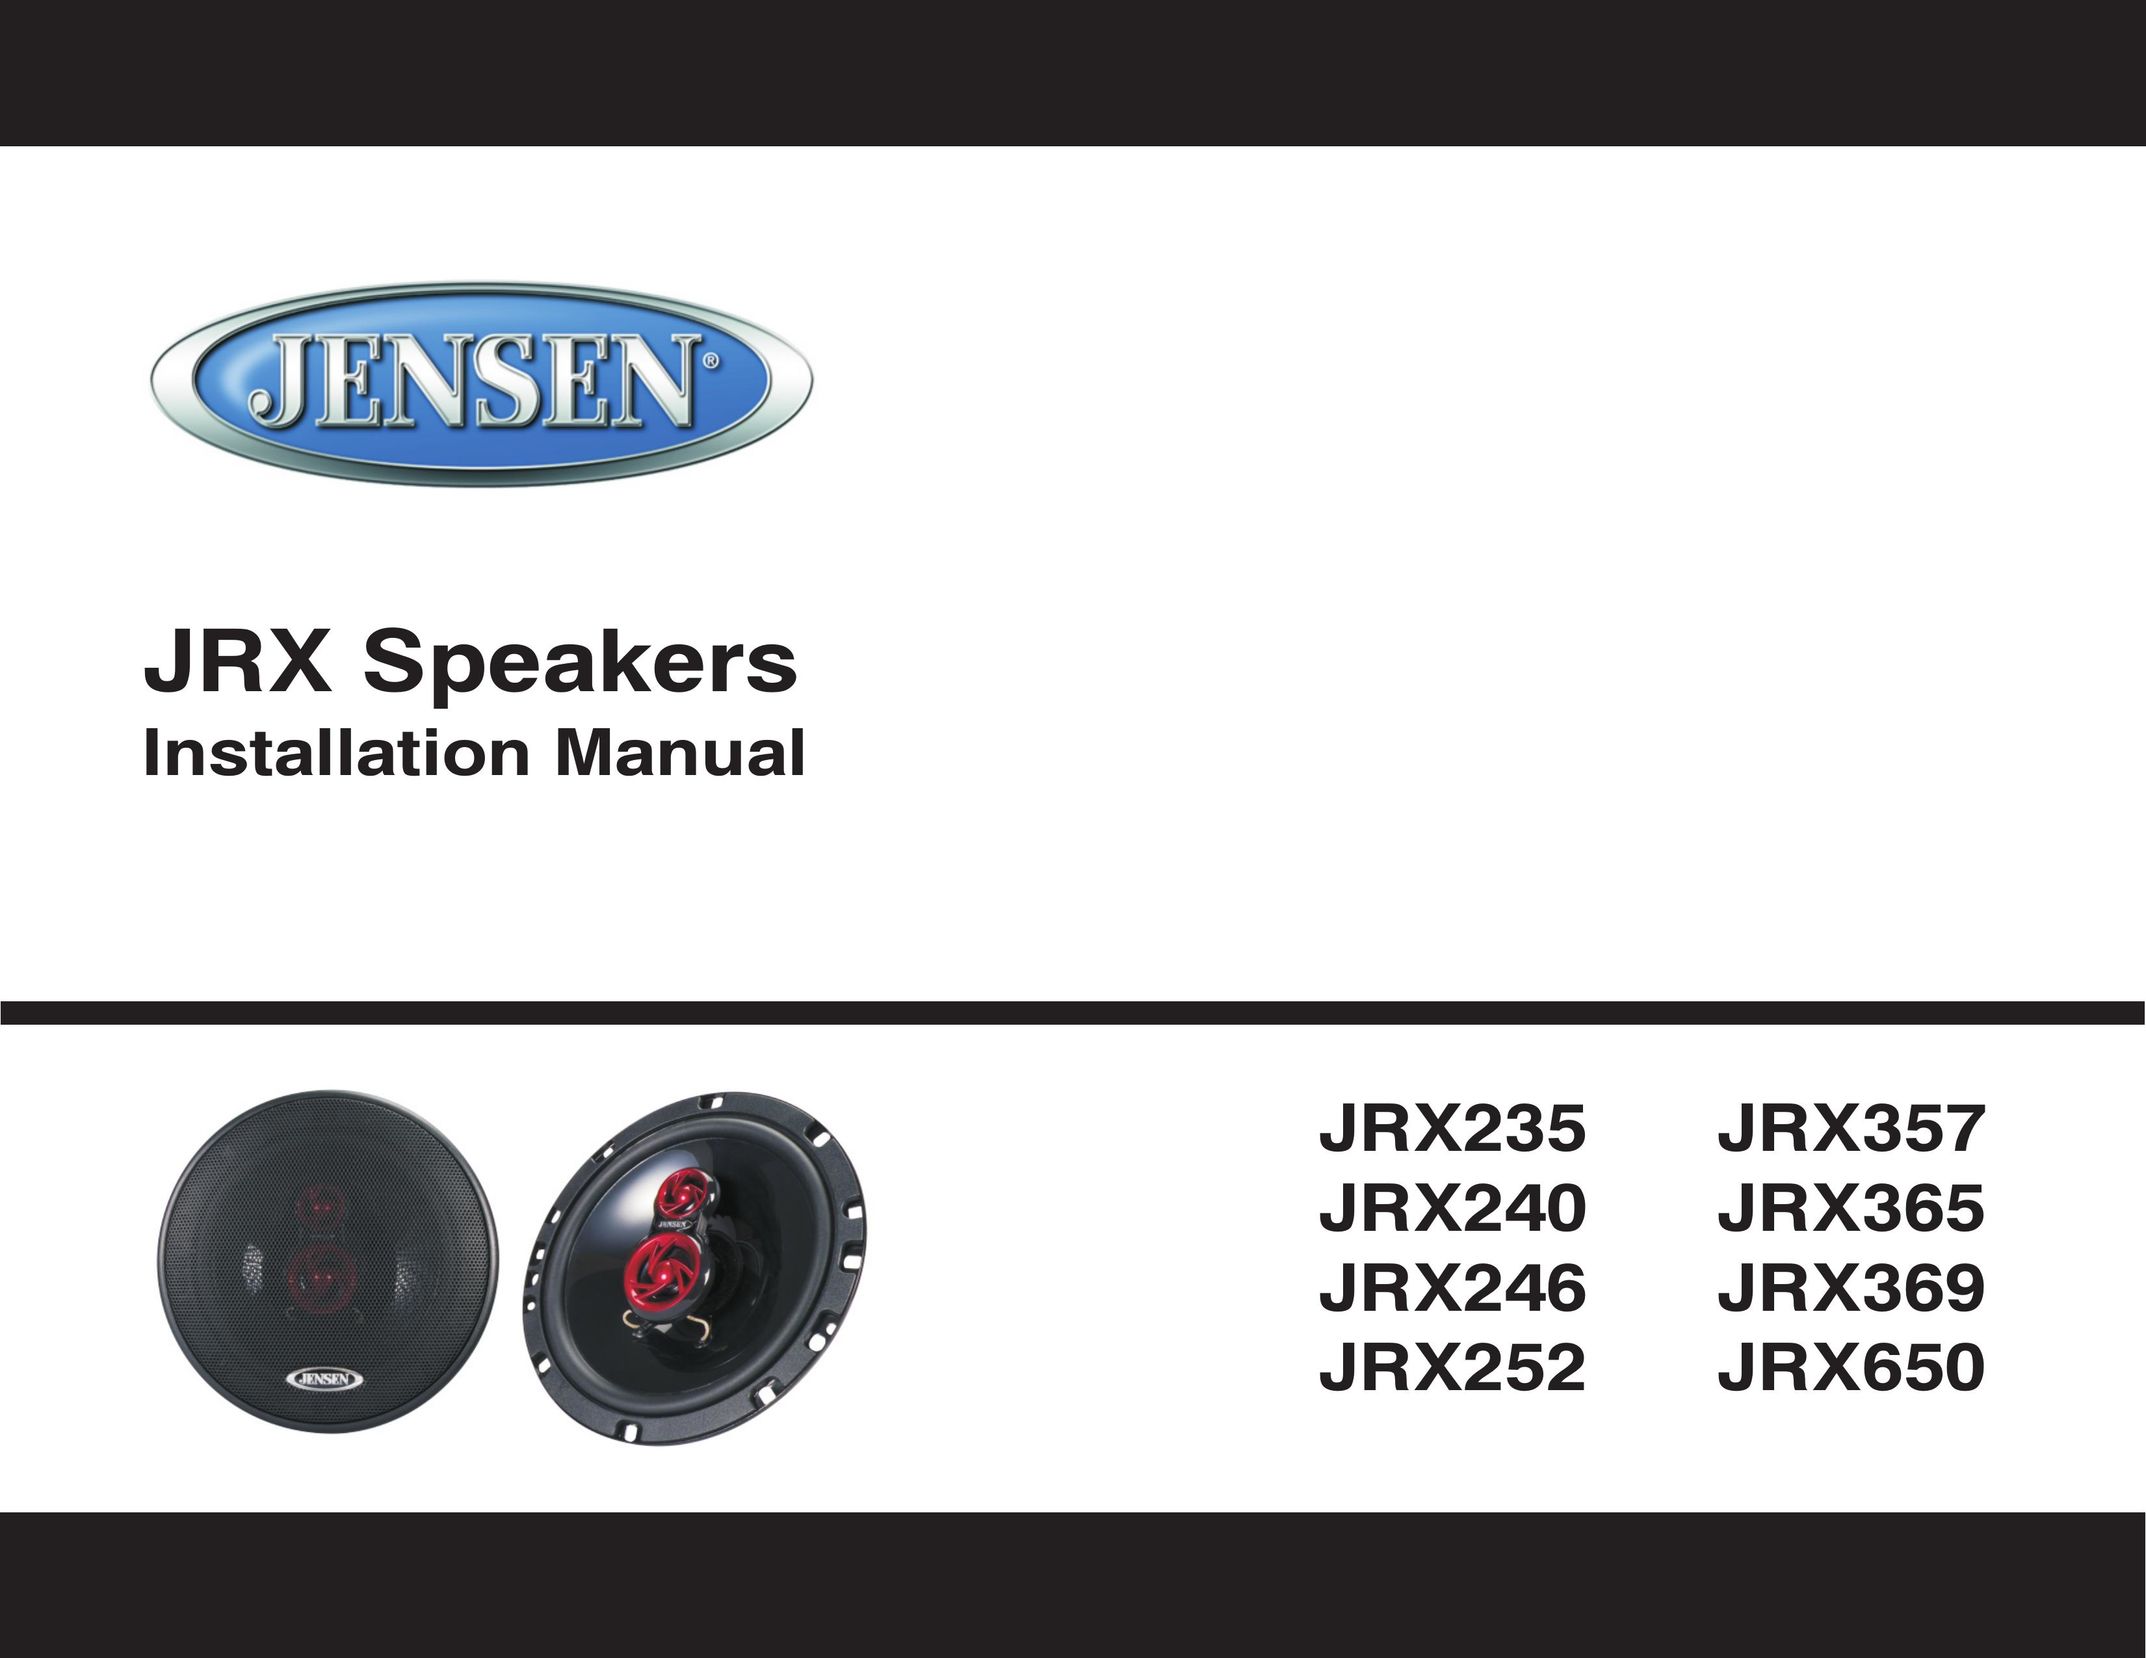 Jensen JRX369 Speaker User Manual